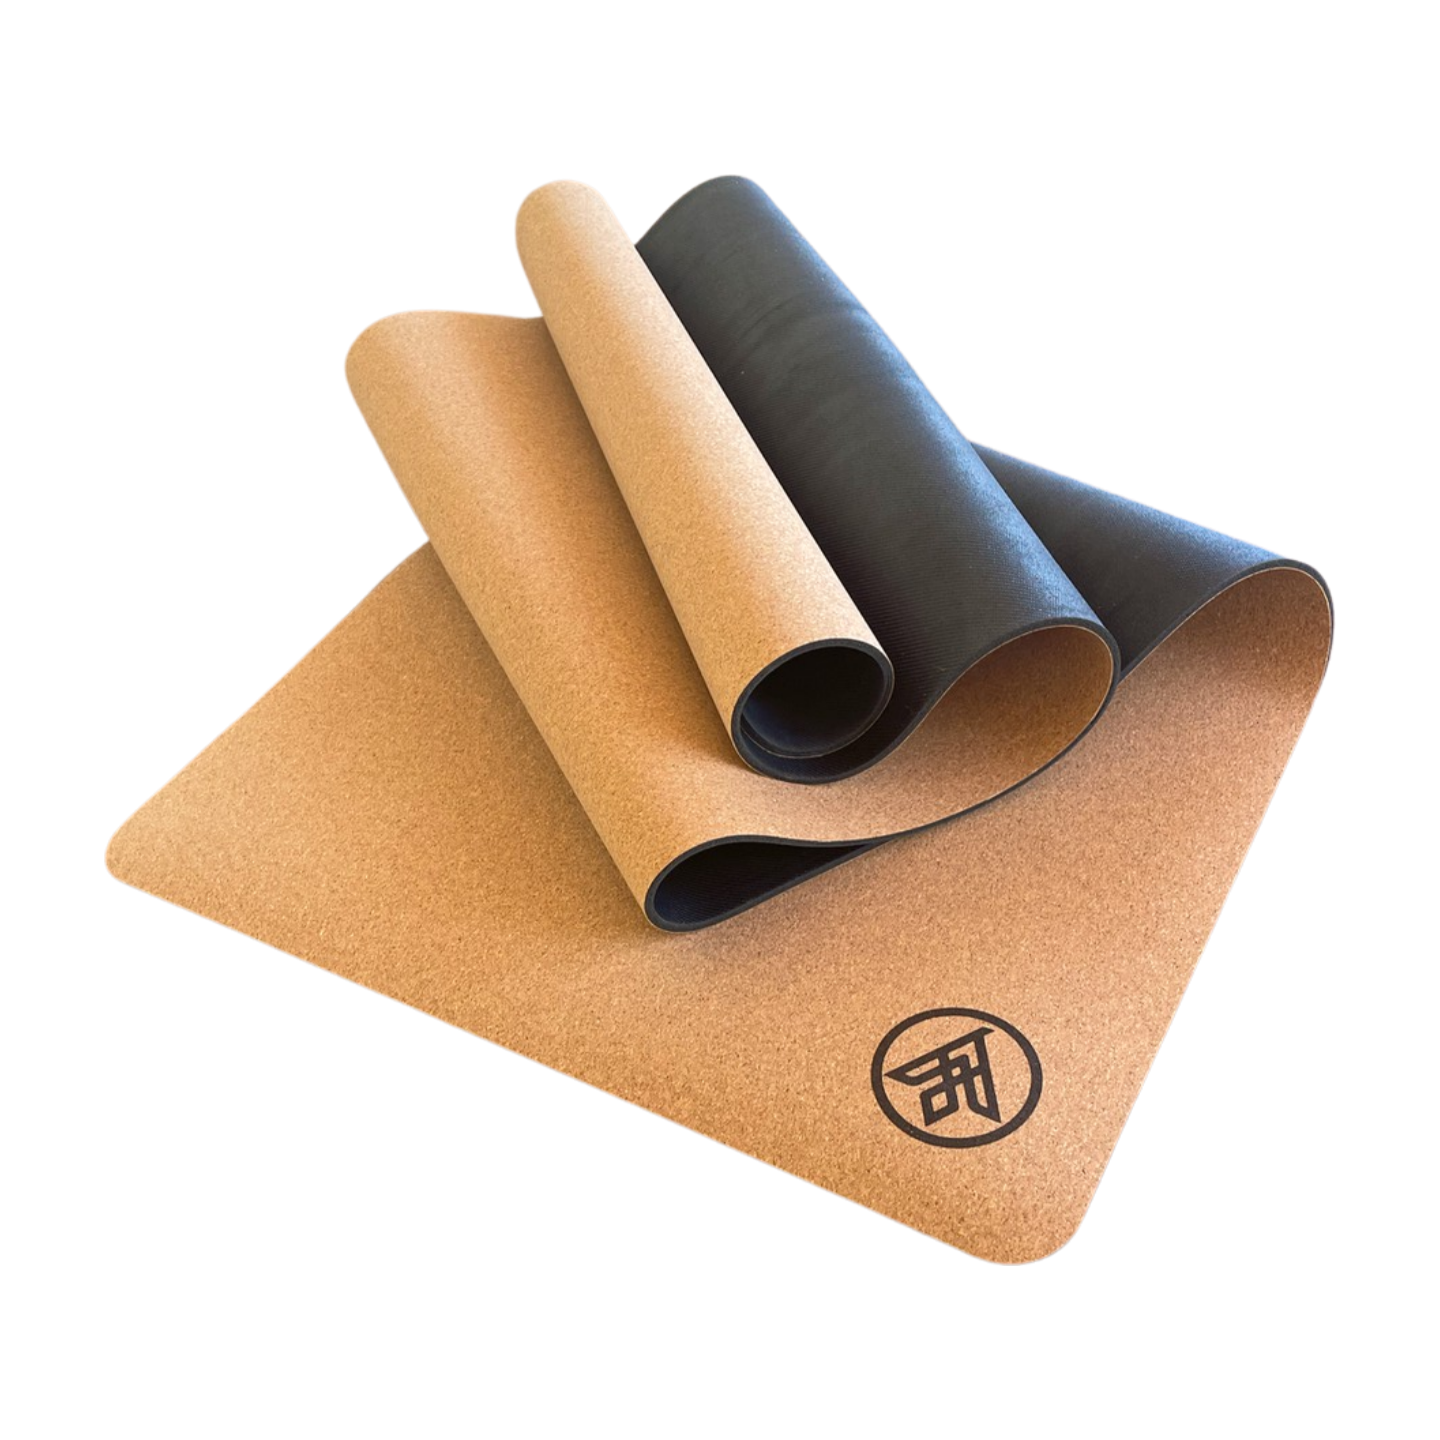 Yoga Eco Cork mat – Airex-US